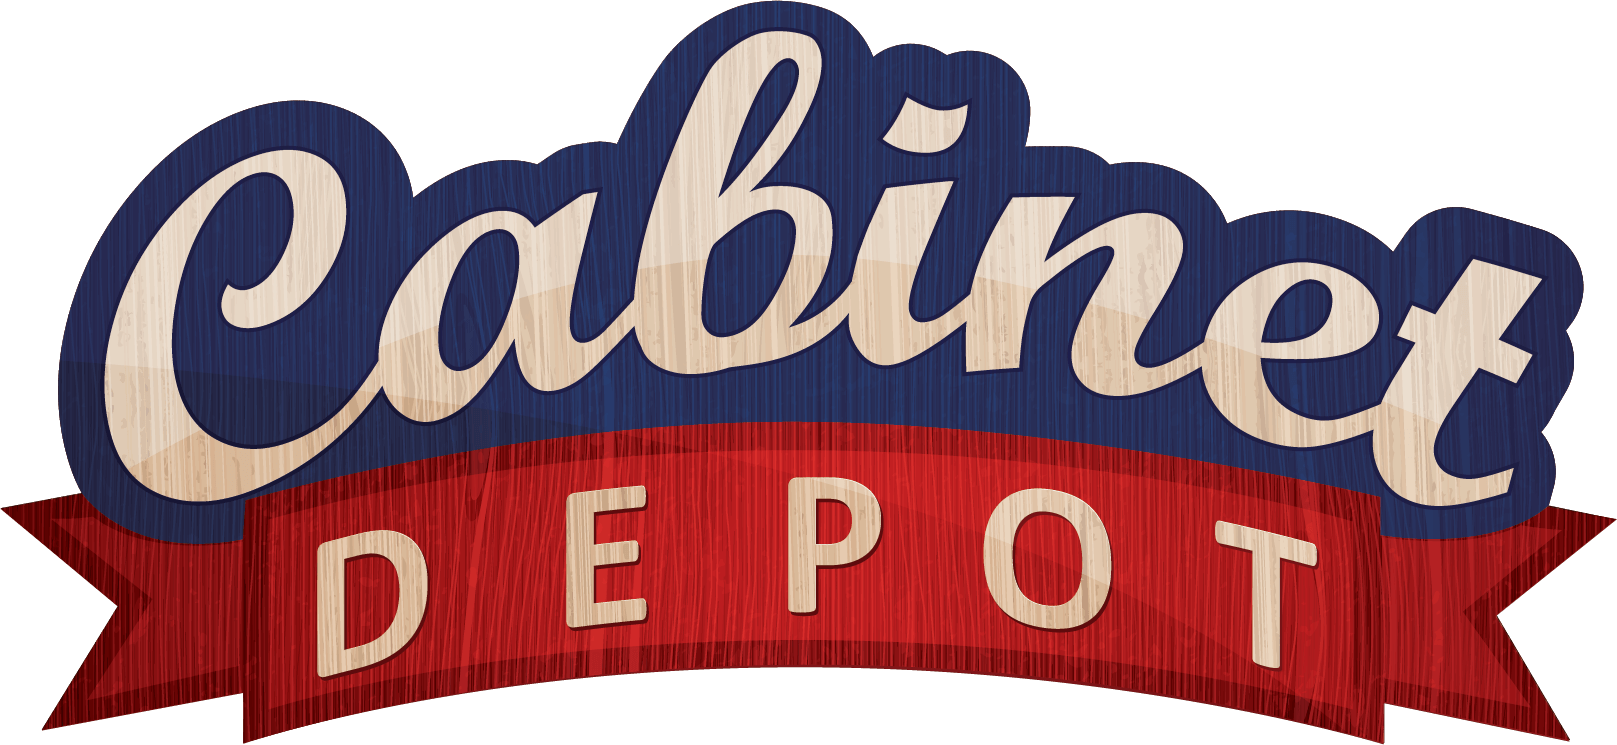 Cabinet Depot logo